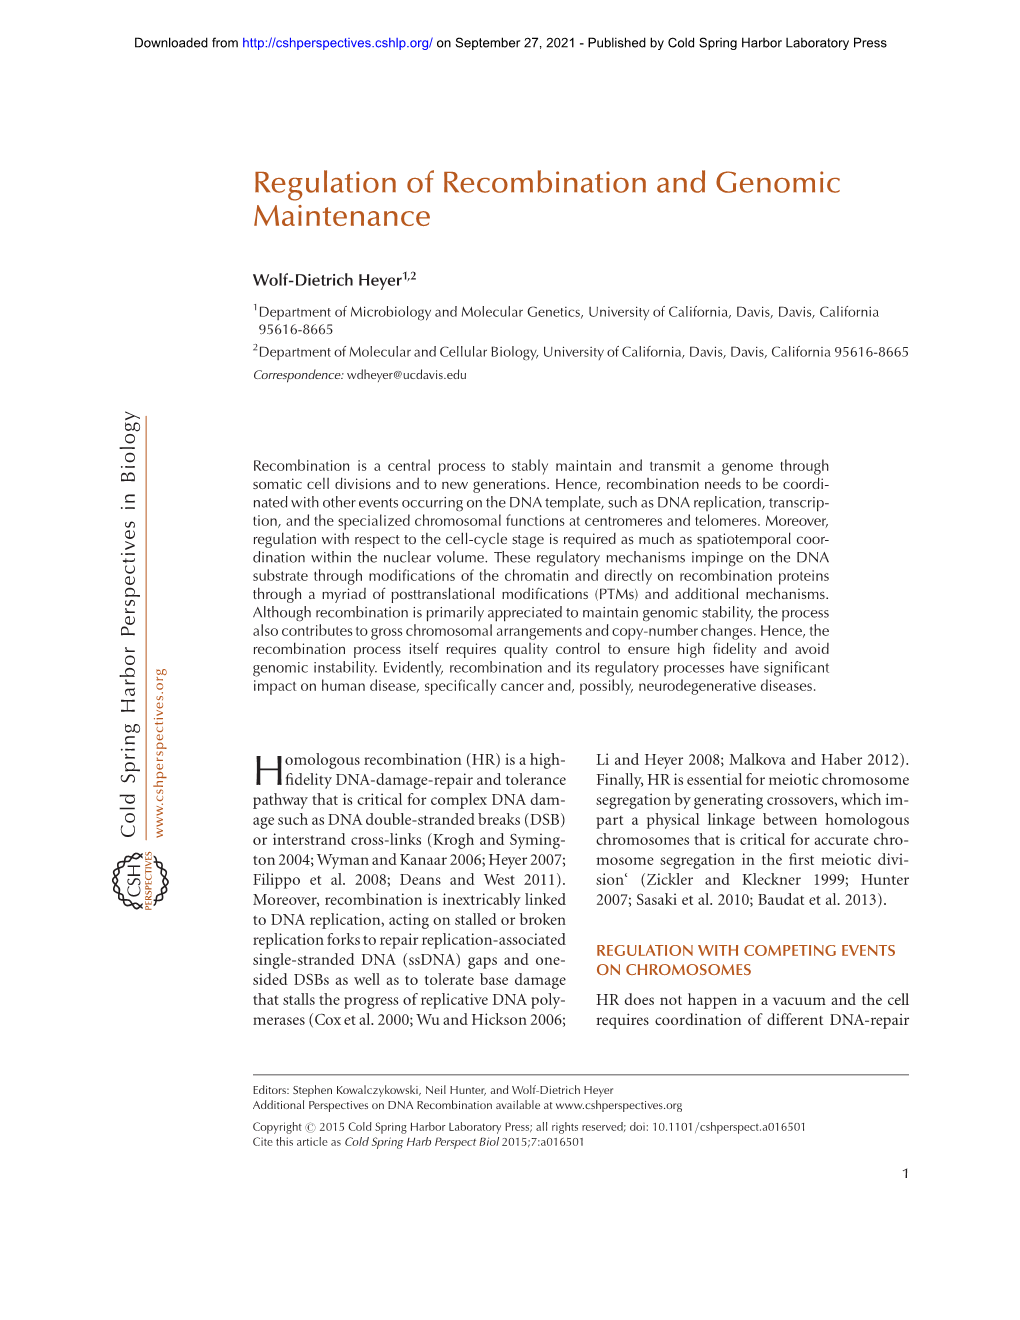 Regulation of Recombination and Genomic Maintenance